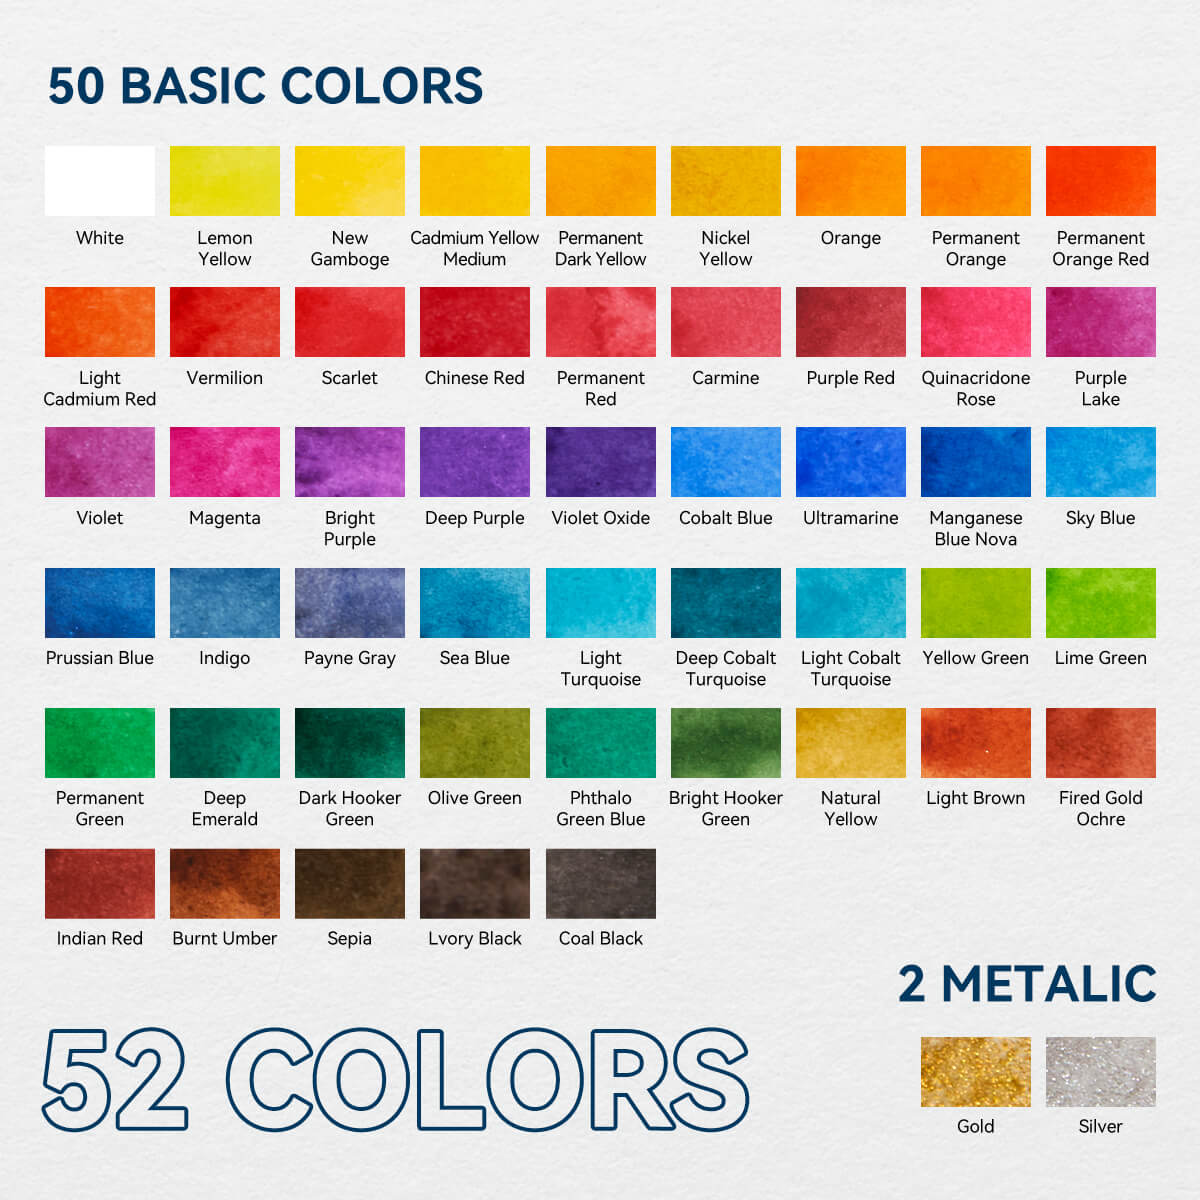 MeiLiang Solid Watercolor Paint Set 52 Colors Standard (Purple Box)